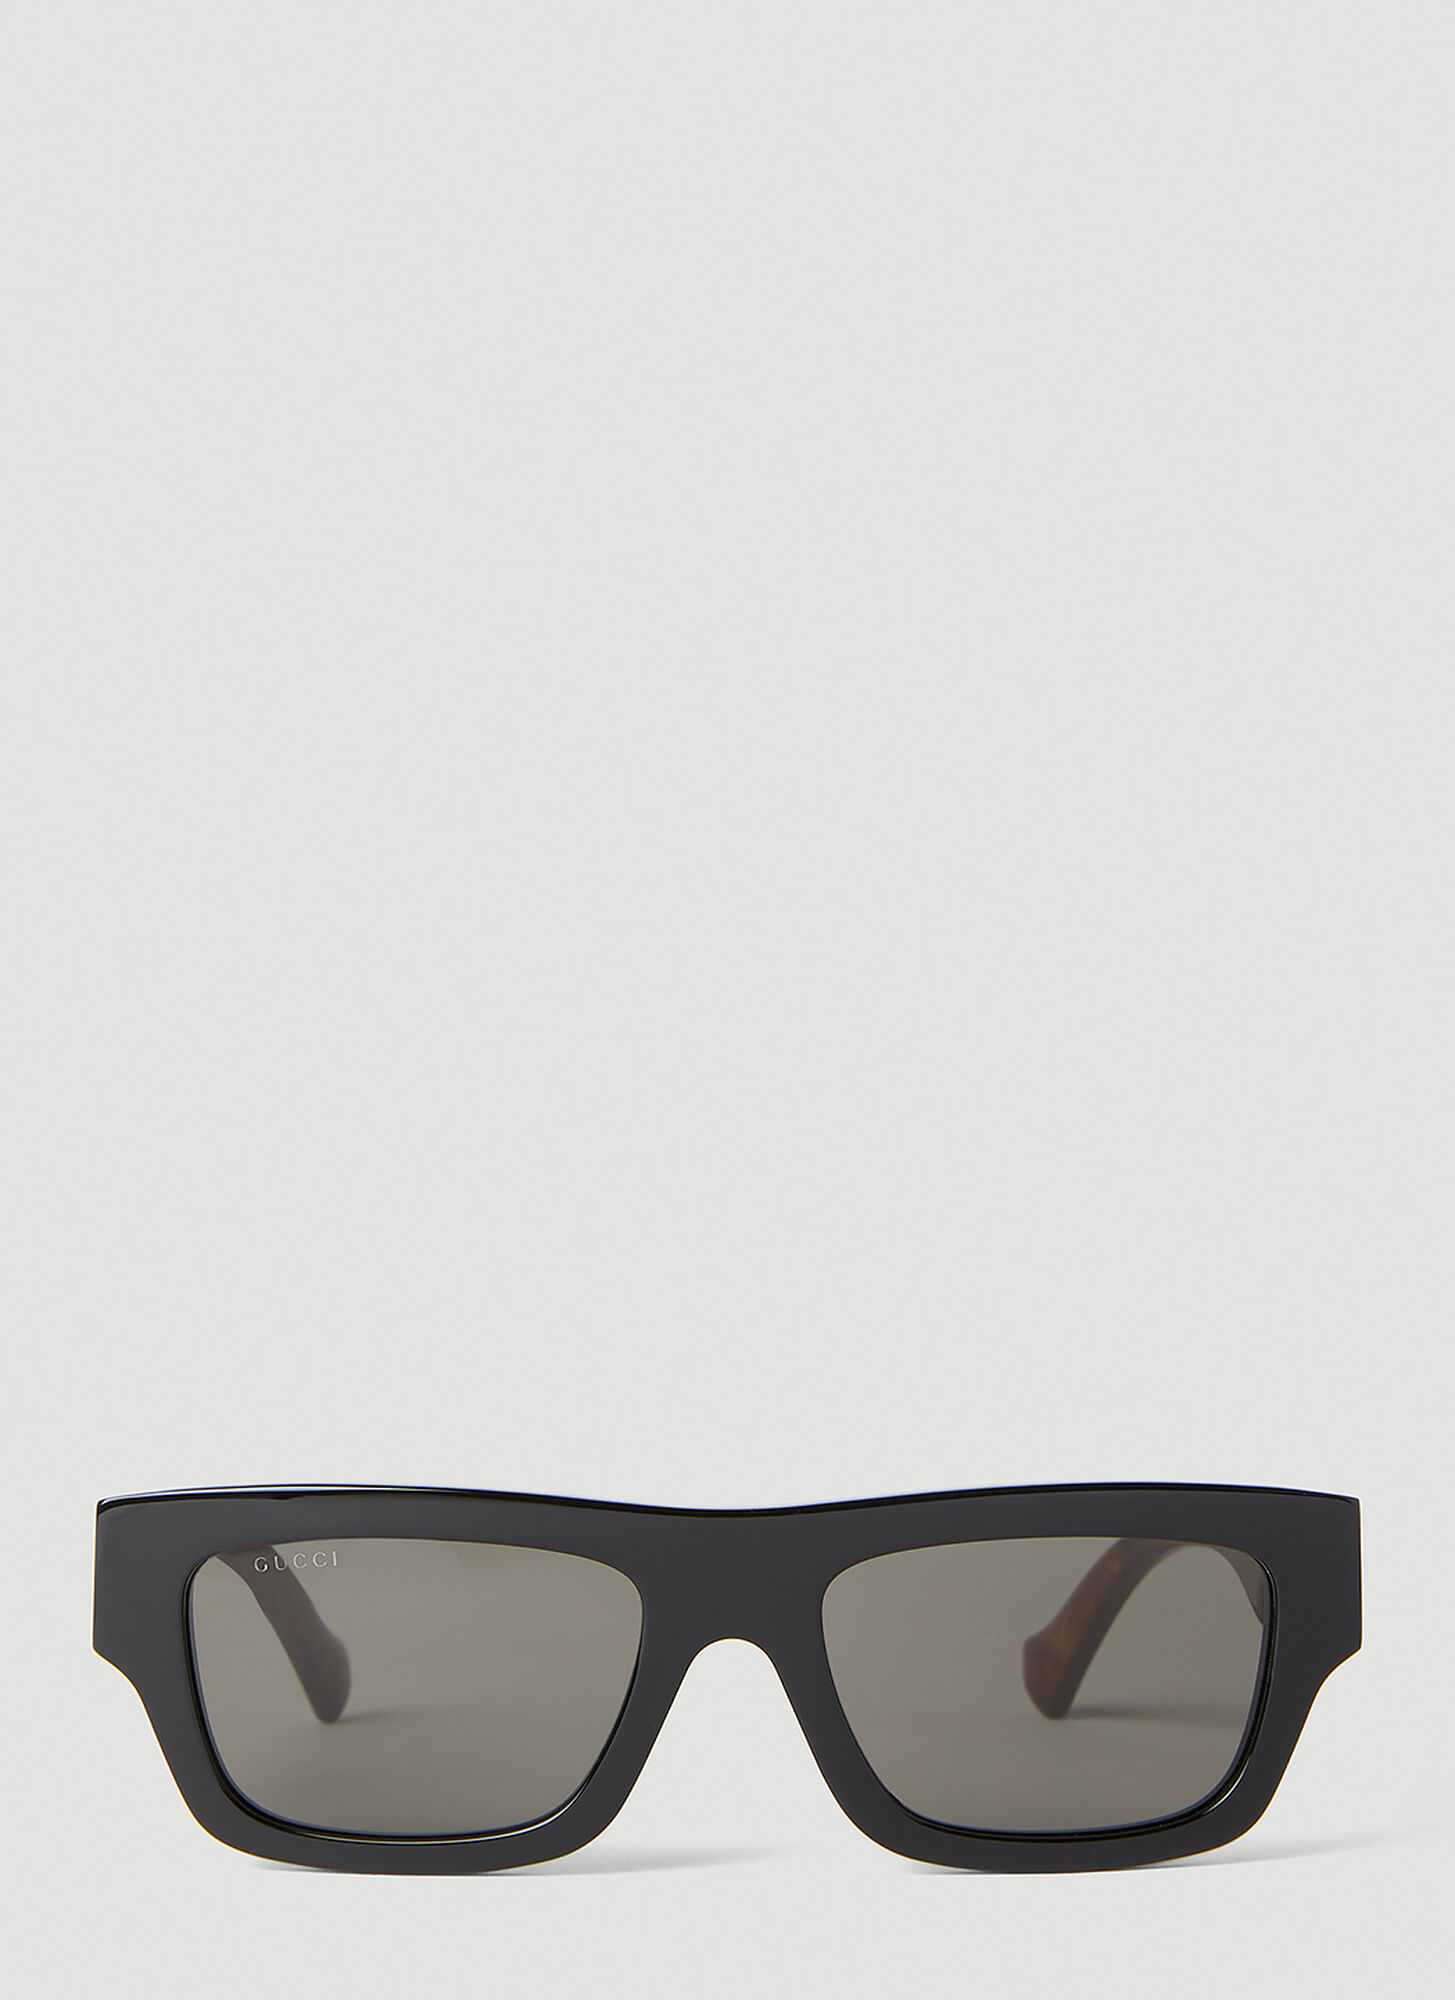 Gucci Rectangular Sunglasses In Brown